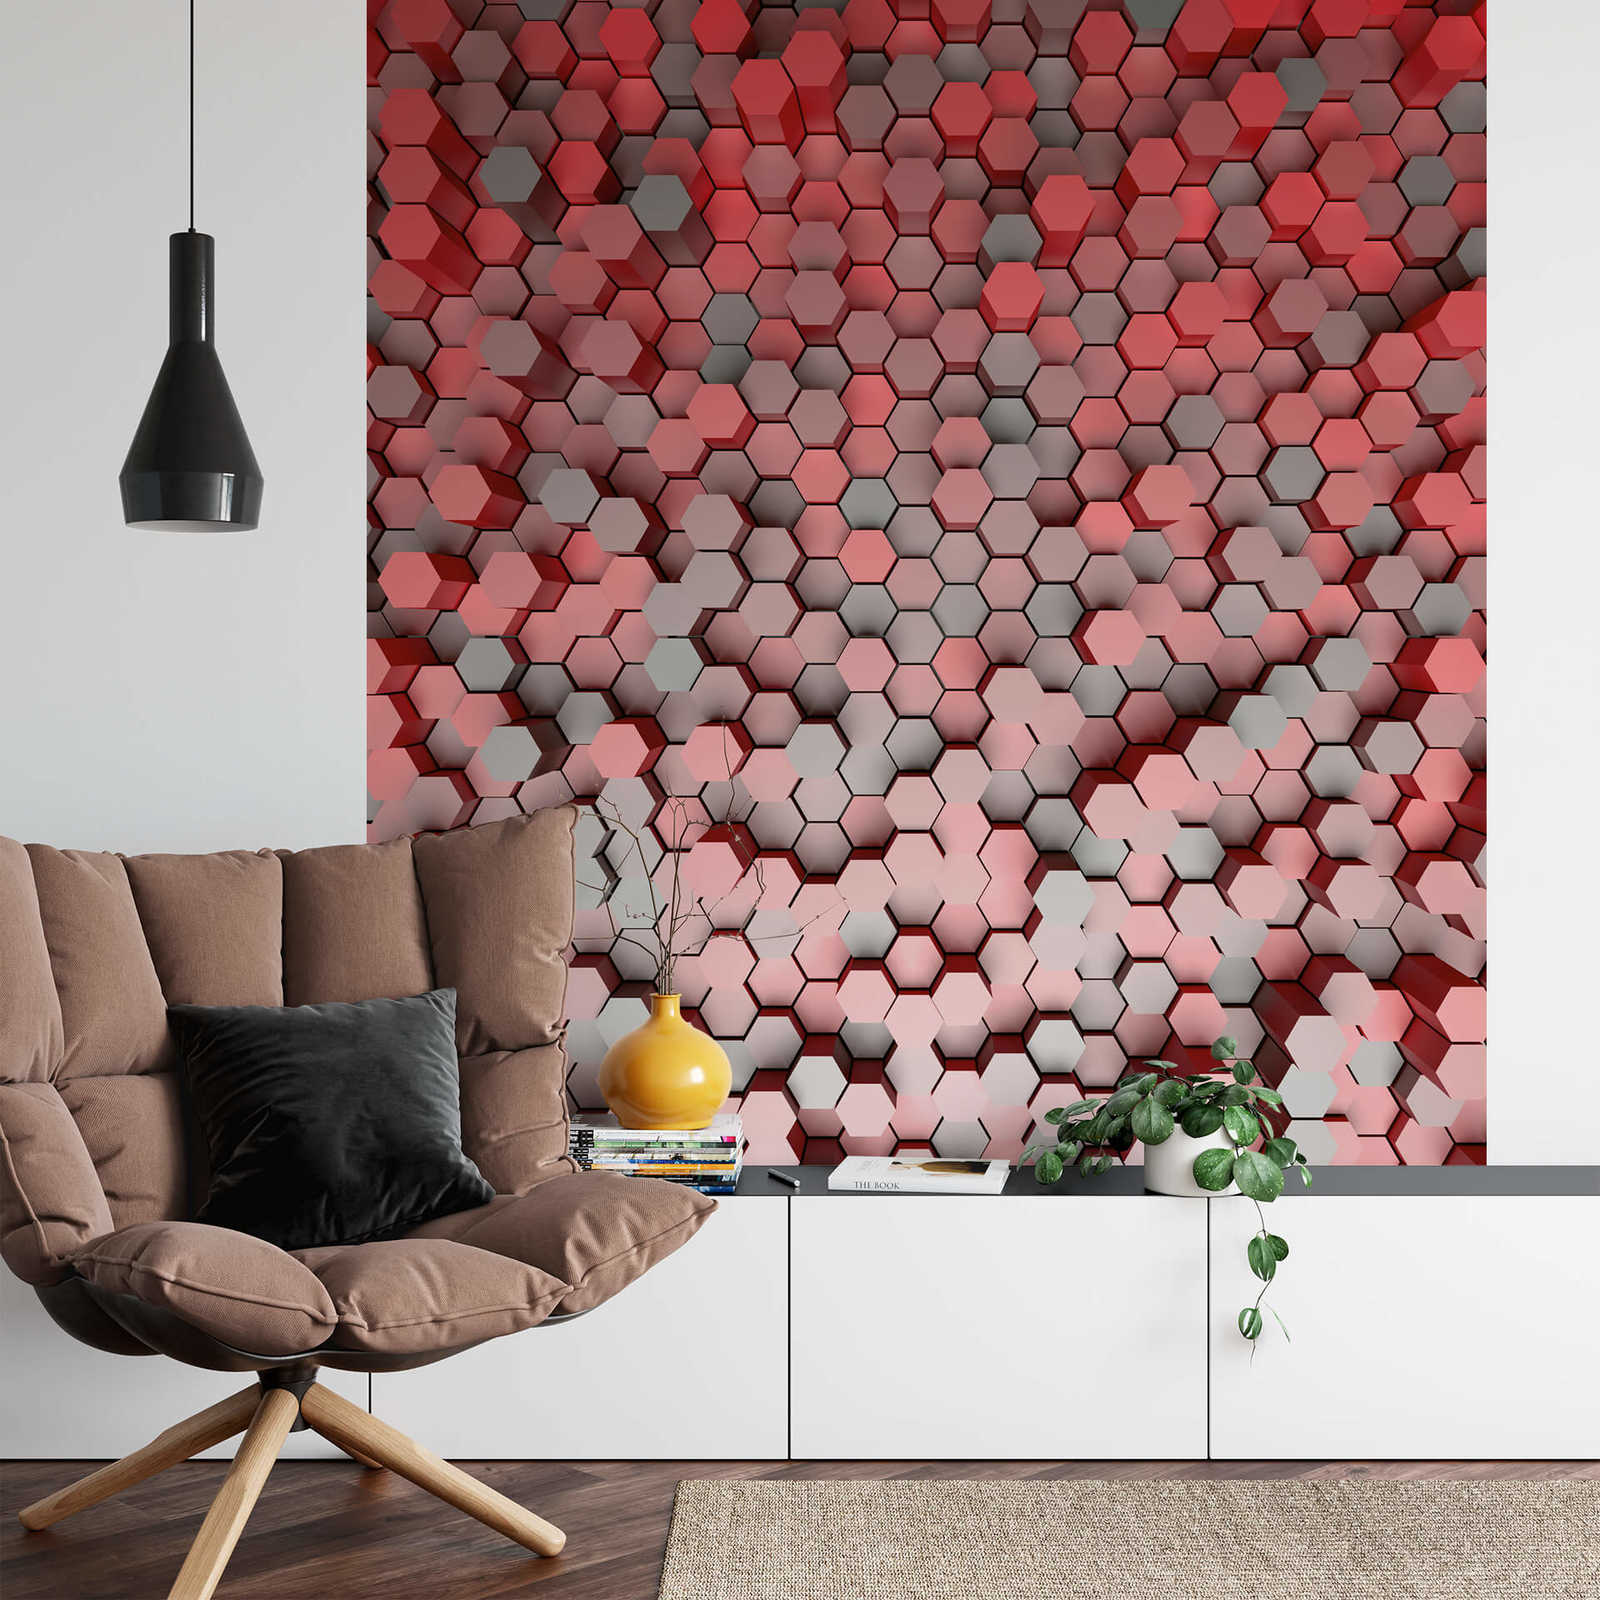             3D Photo wallpaper Hexagon graphic design - red, grey
        